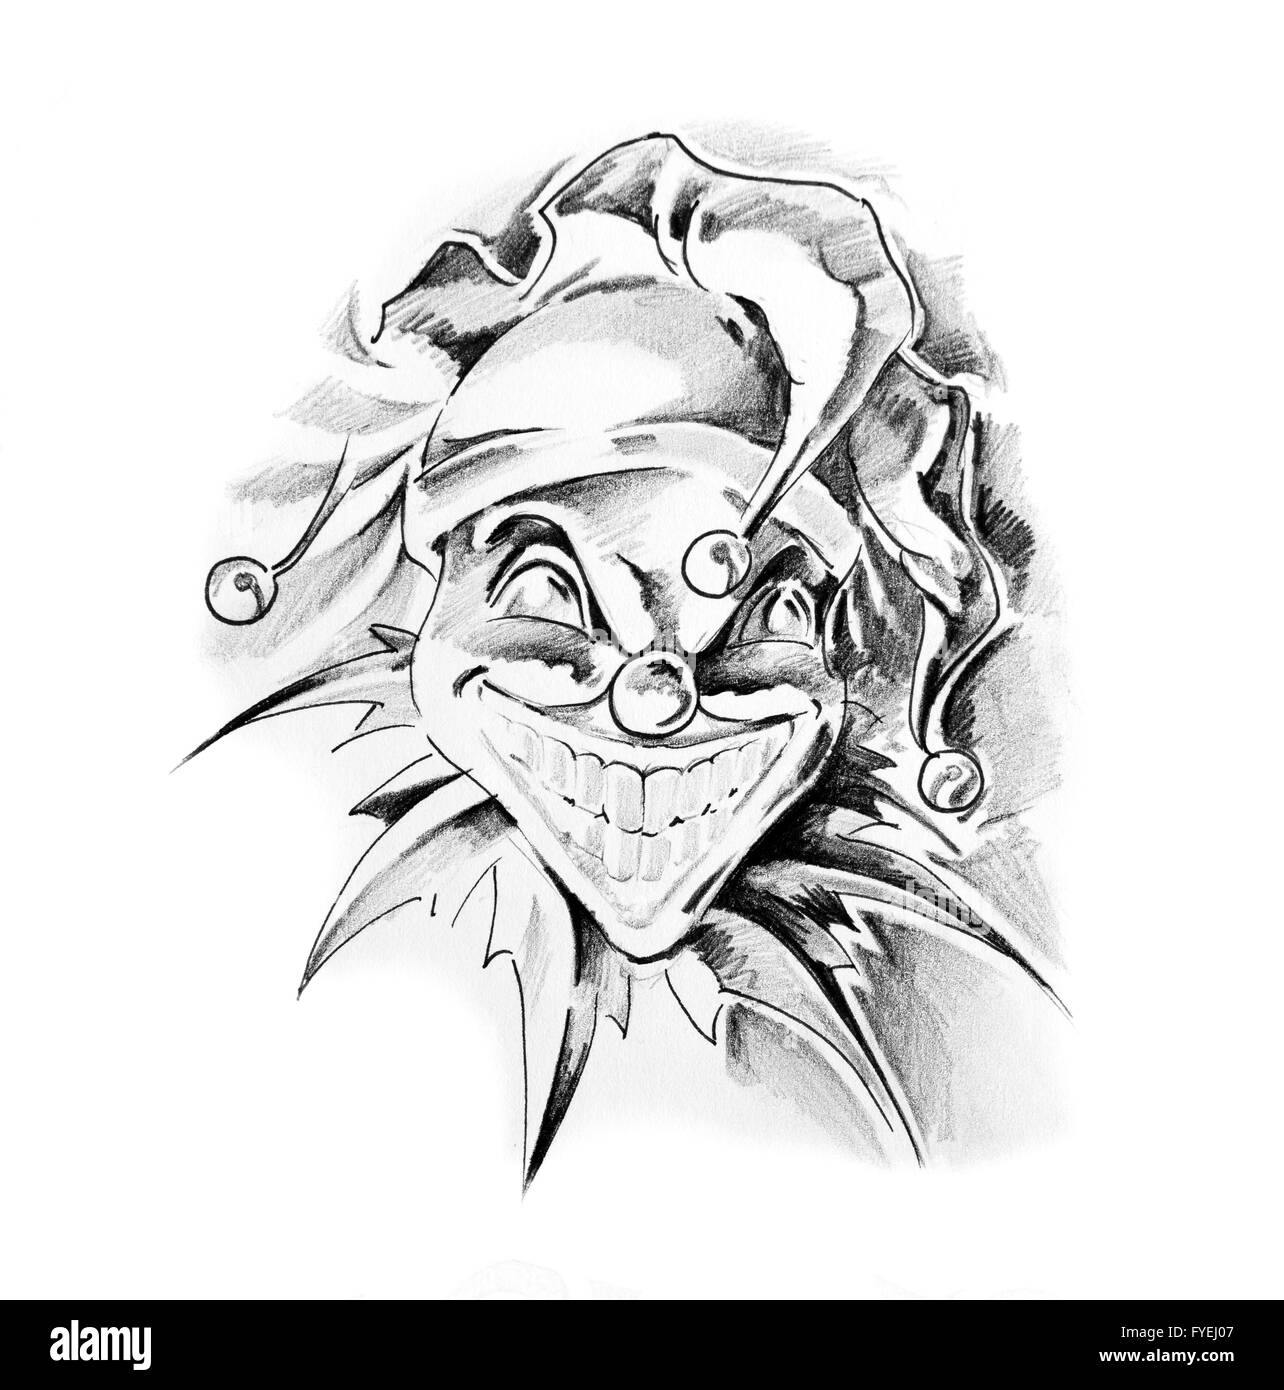 Sketch of tattoo art, clown joker Stock Photo